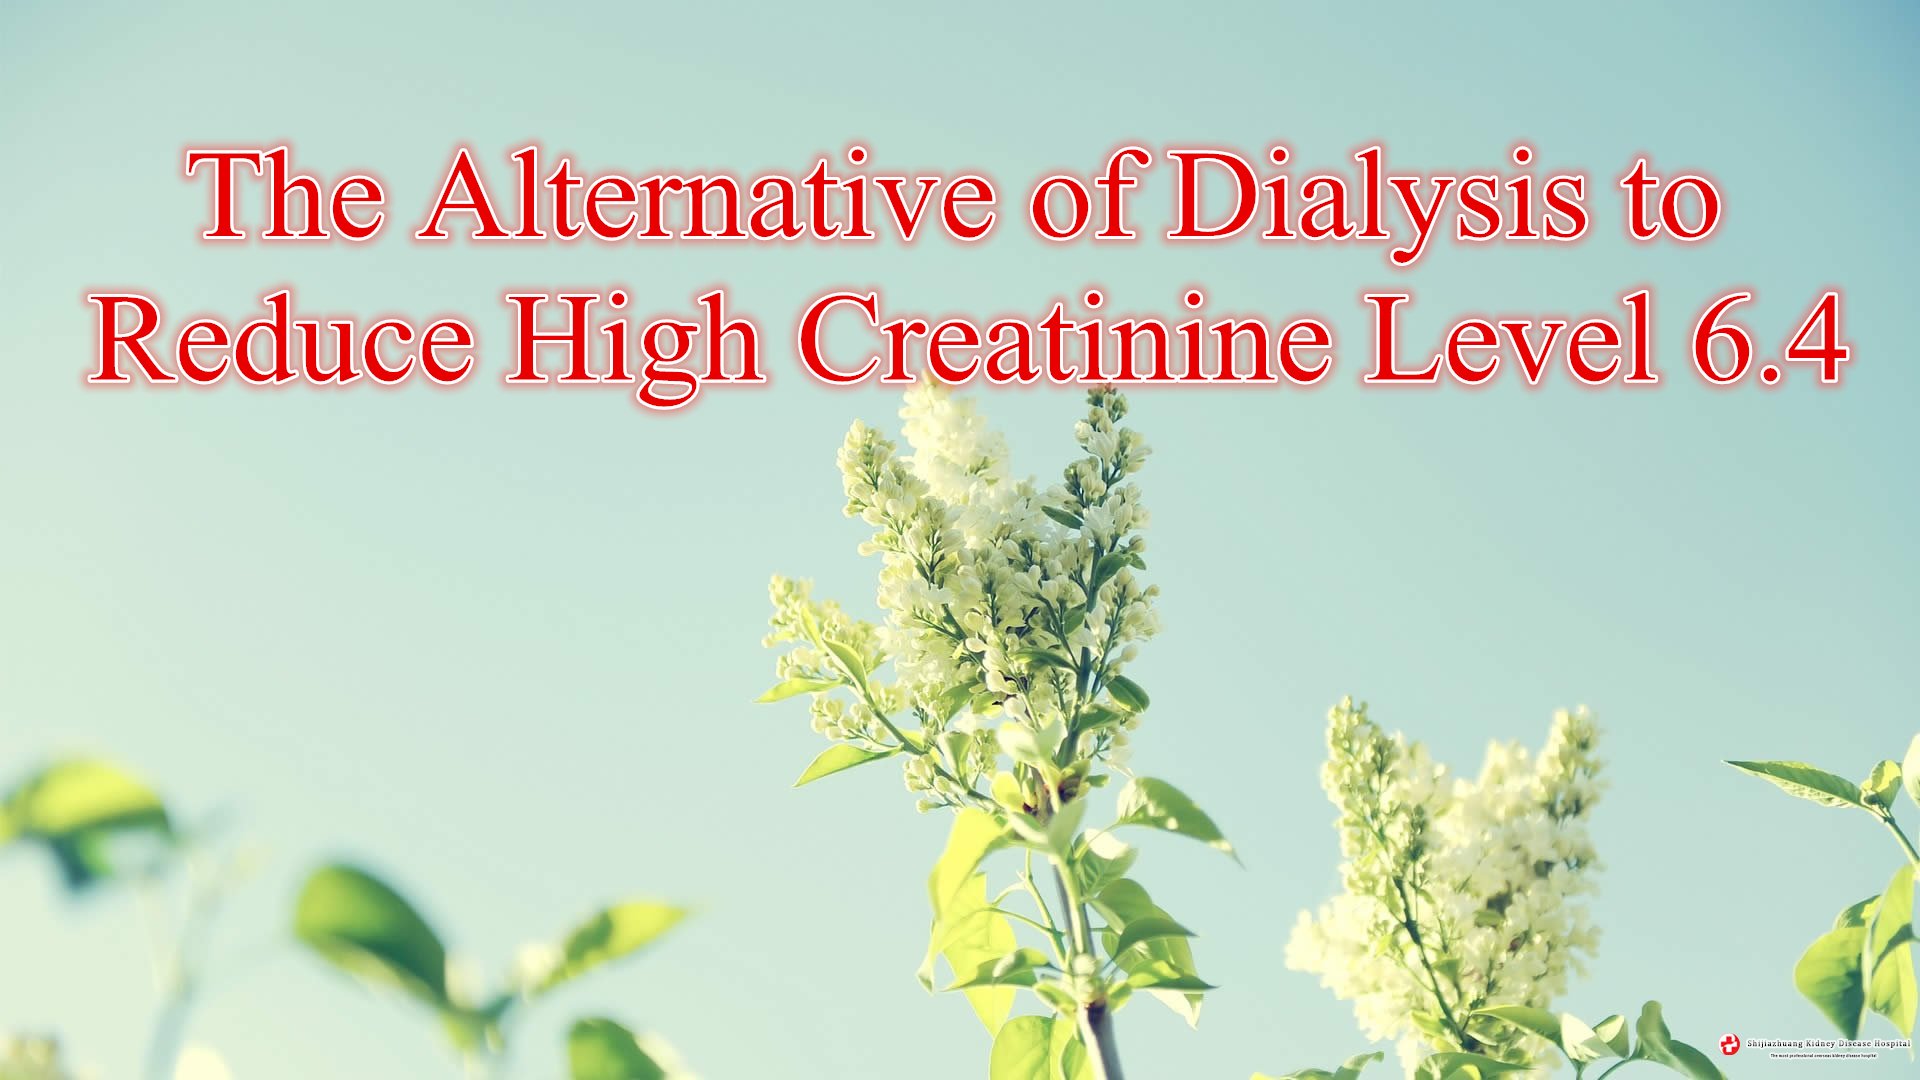 The Alternative of Dialysis to Reduce High Creatinine Level 6.4